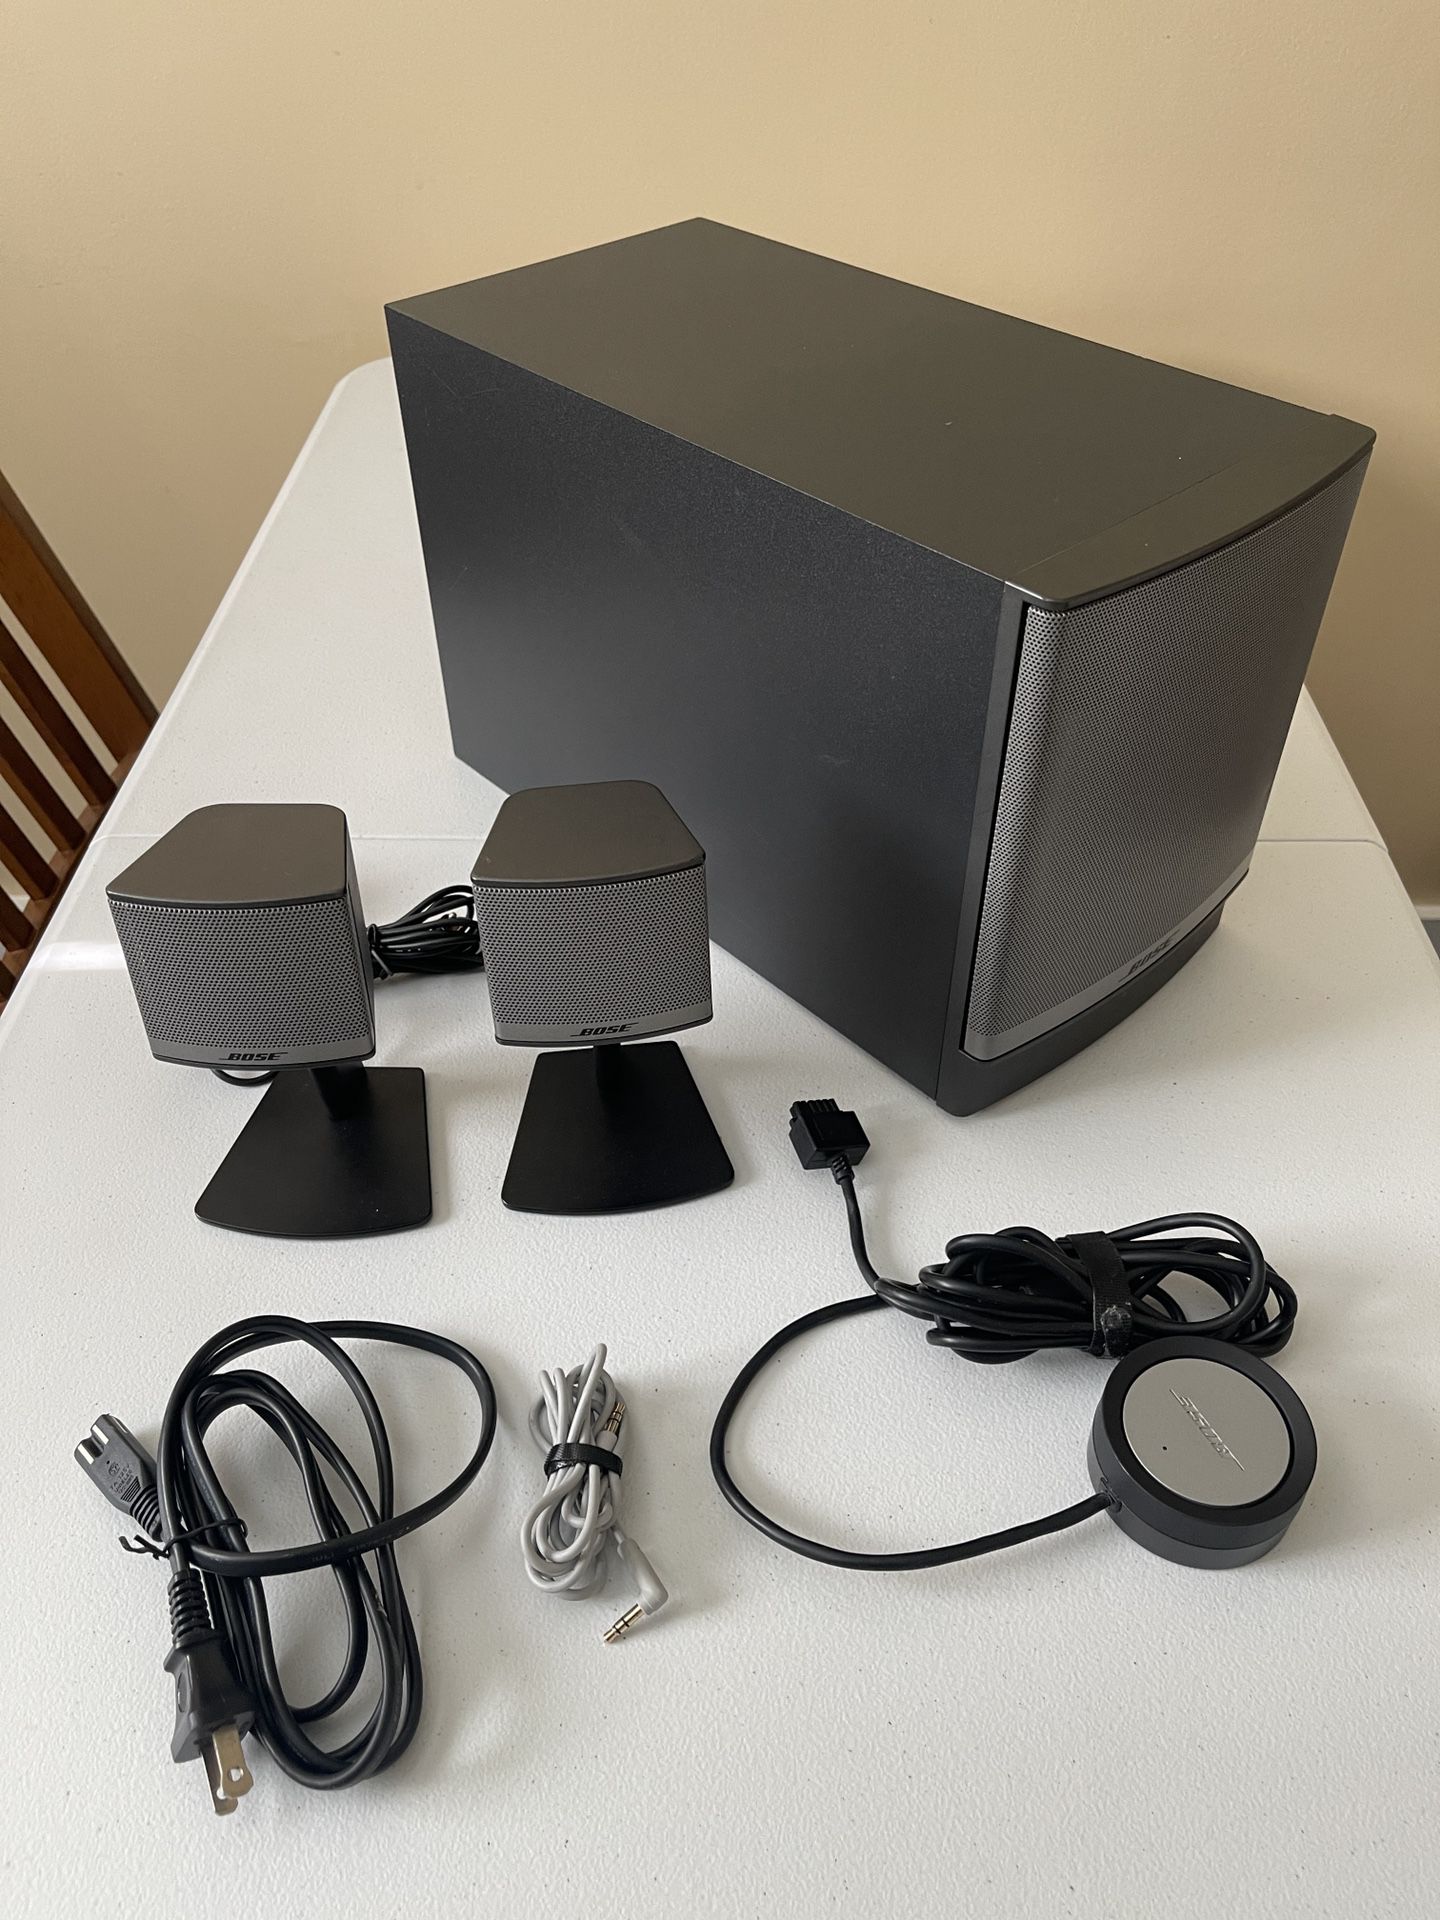 Bose Companion 3, Series 2 Speakers